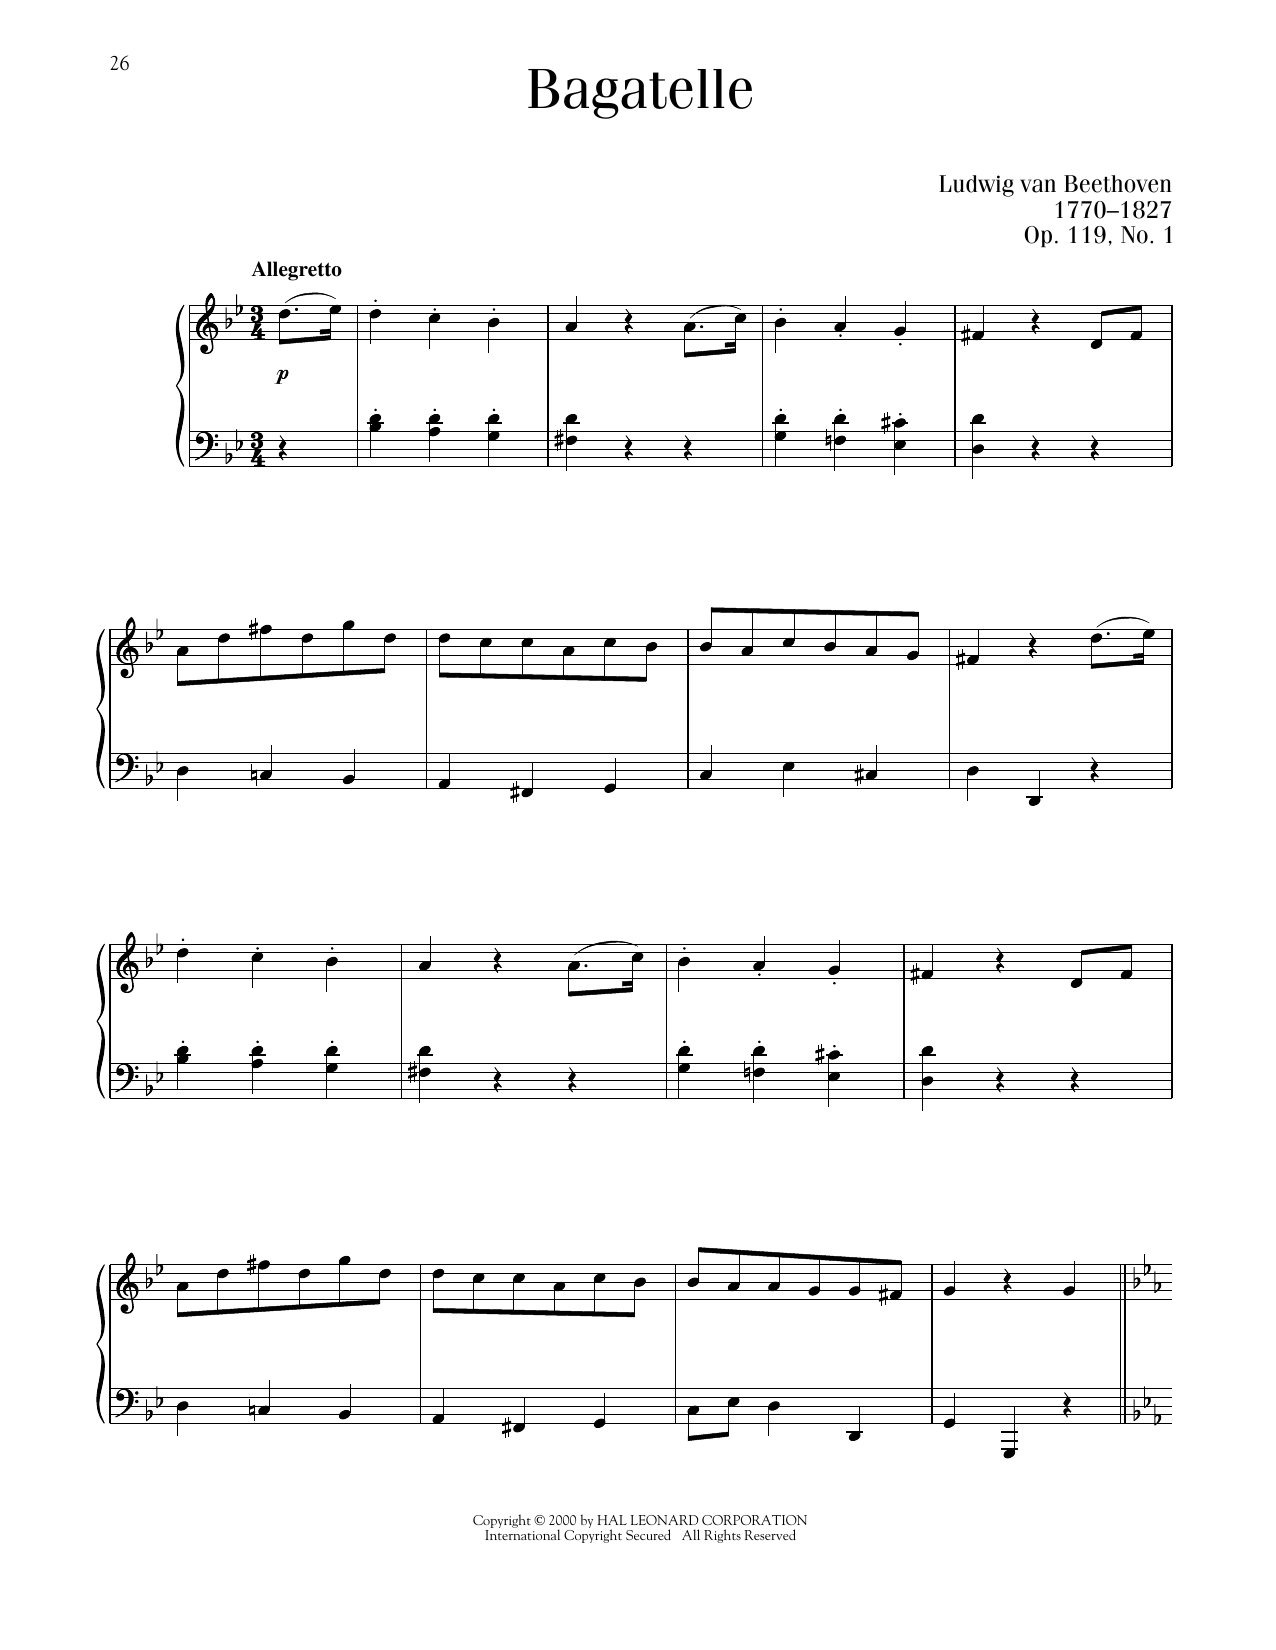 Ludwig van Beethoven Bagatelle, Op. 119, No. 1 sheet music notes printable PDF score